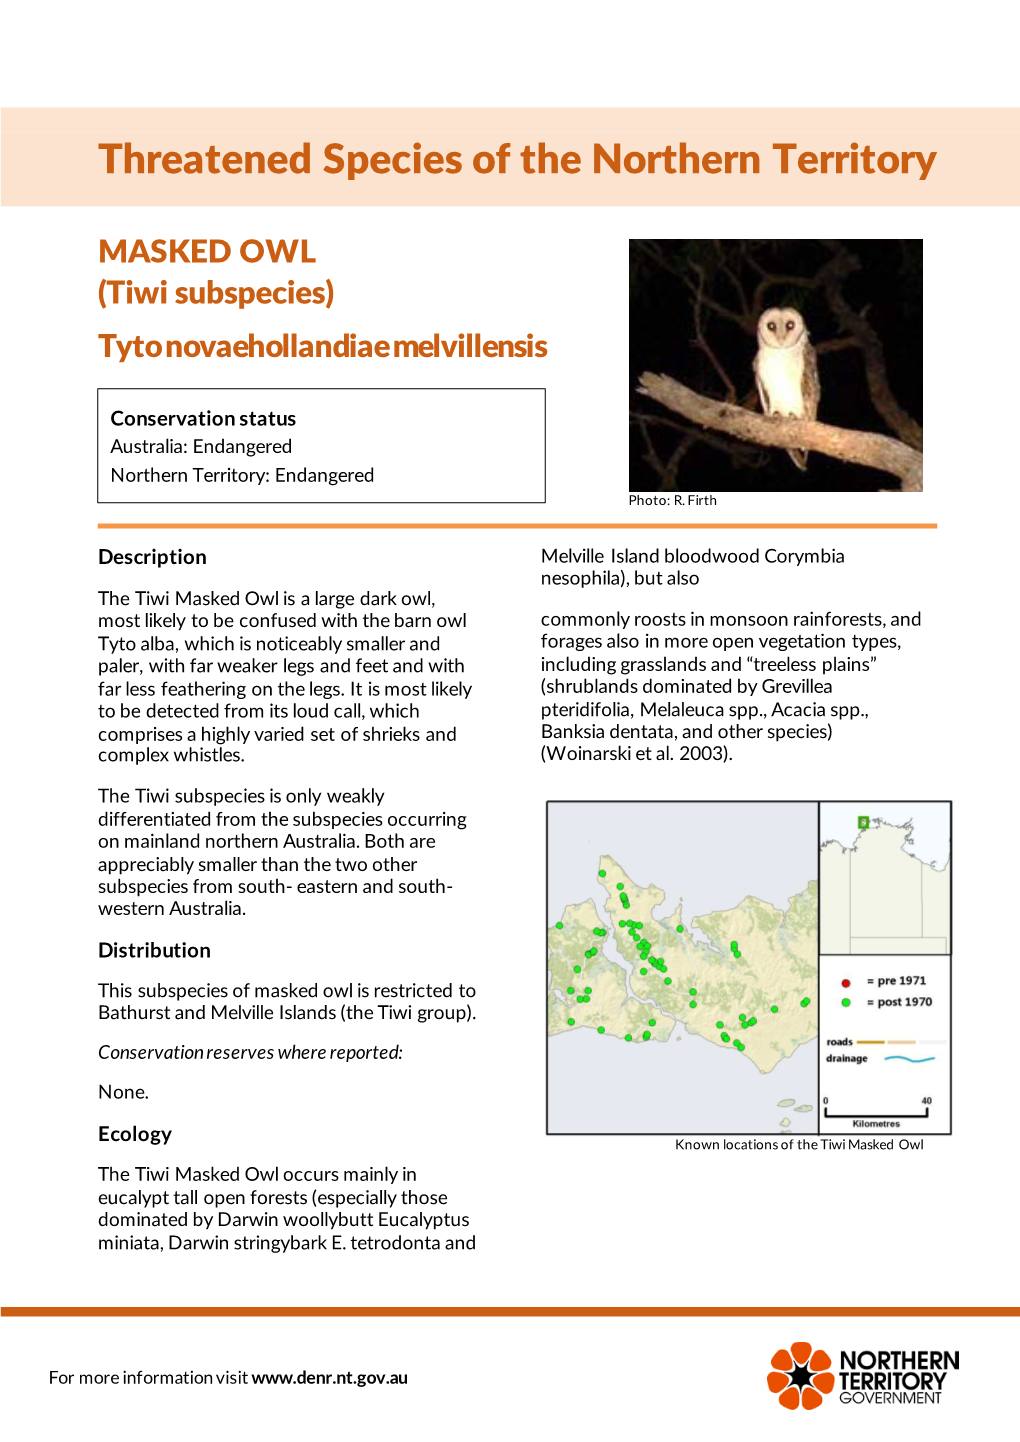 Masked Owl (Tiwi Islands)